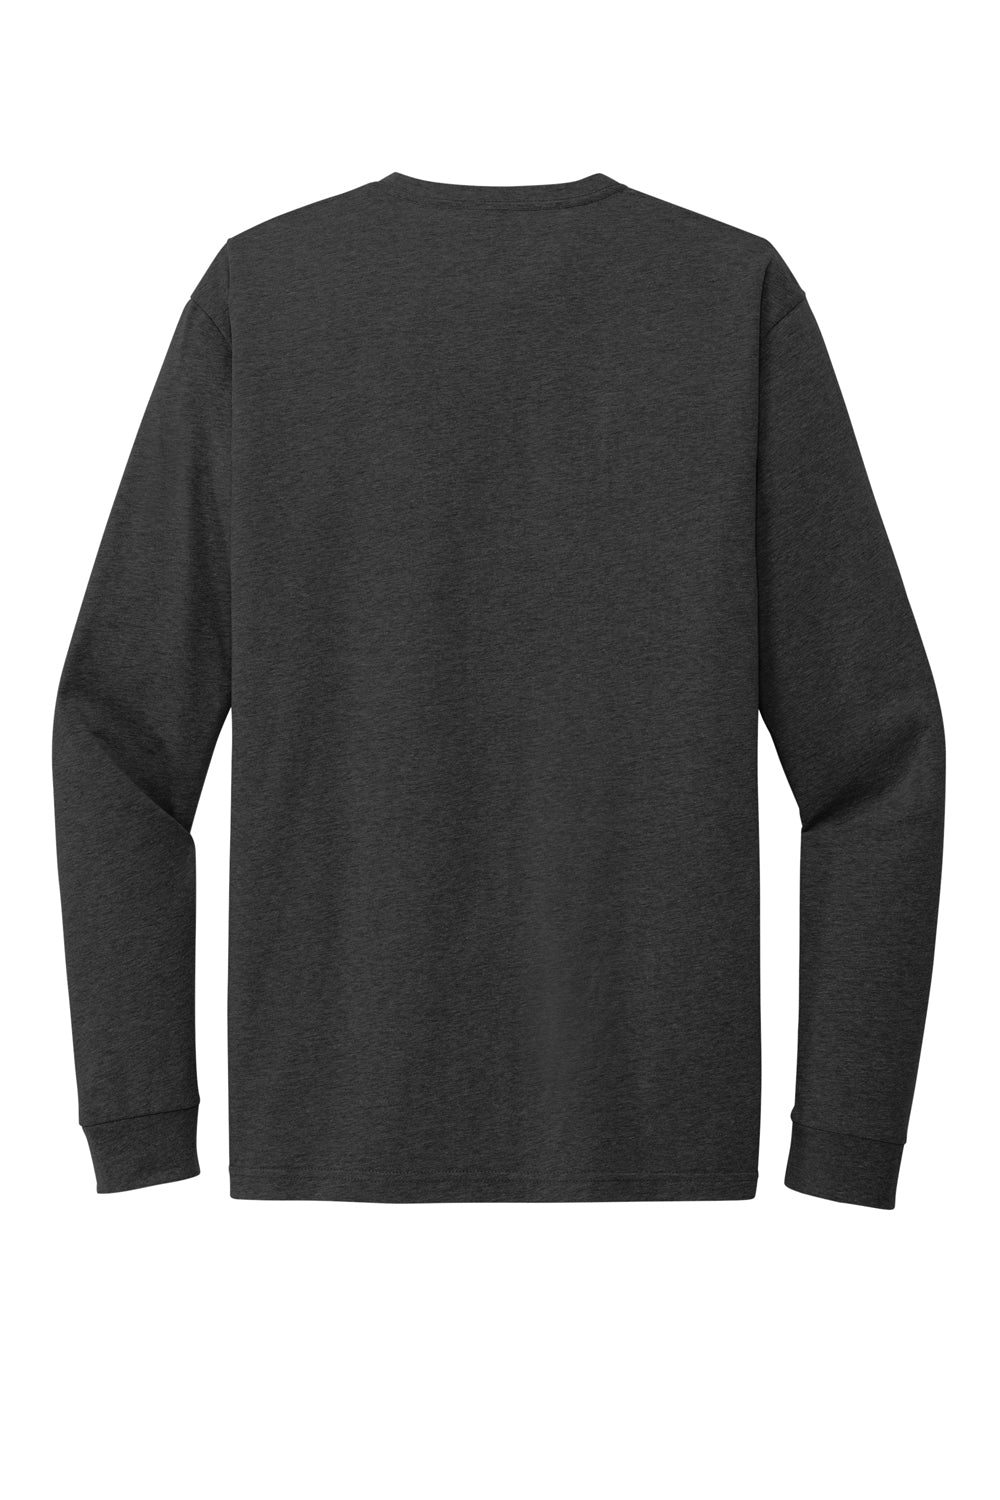 Next Level NL6211 Mens CVC Long Sleeve Crewneck T-Shirt Charcoal Grey Flat Back